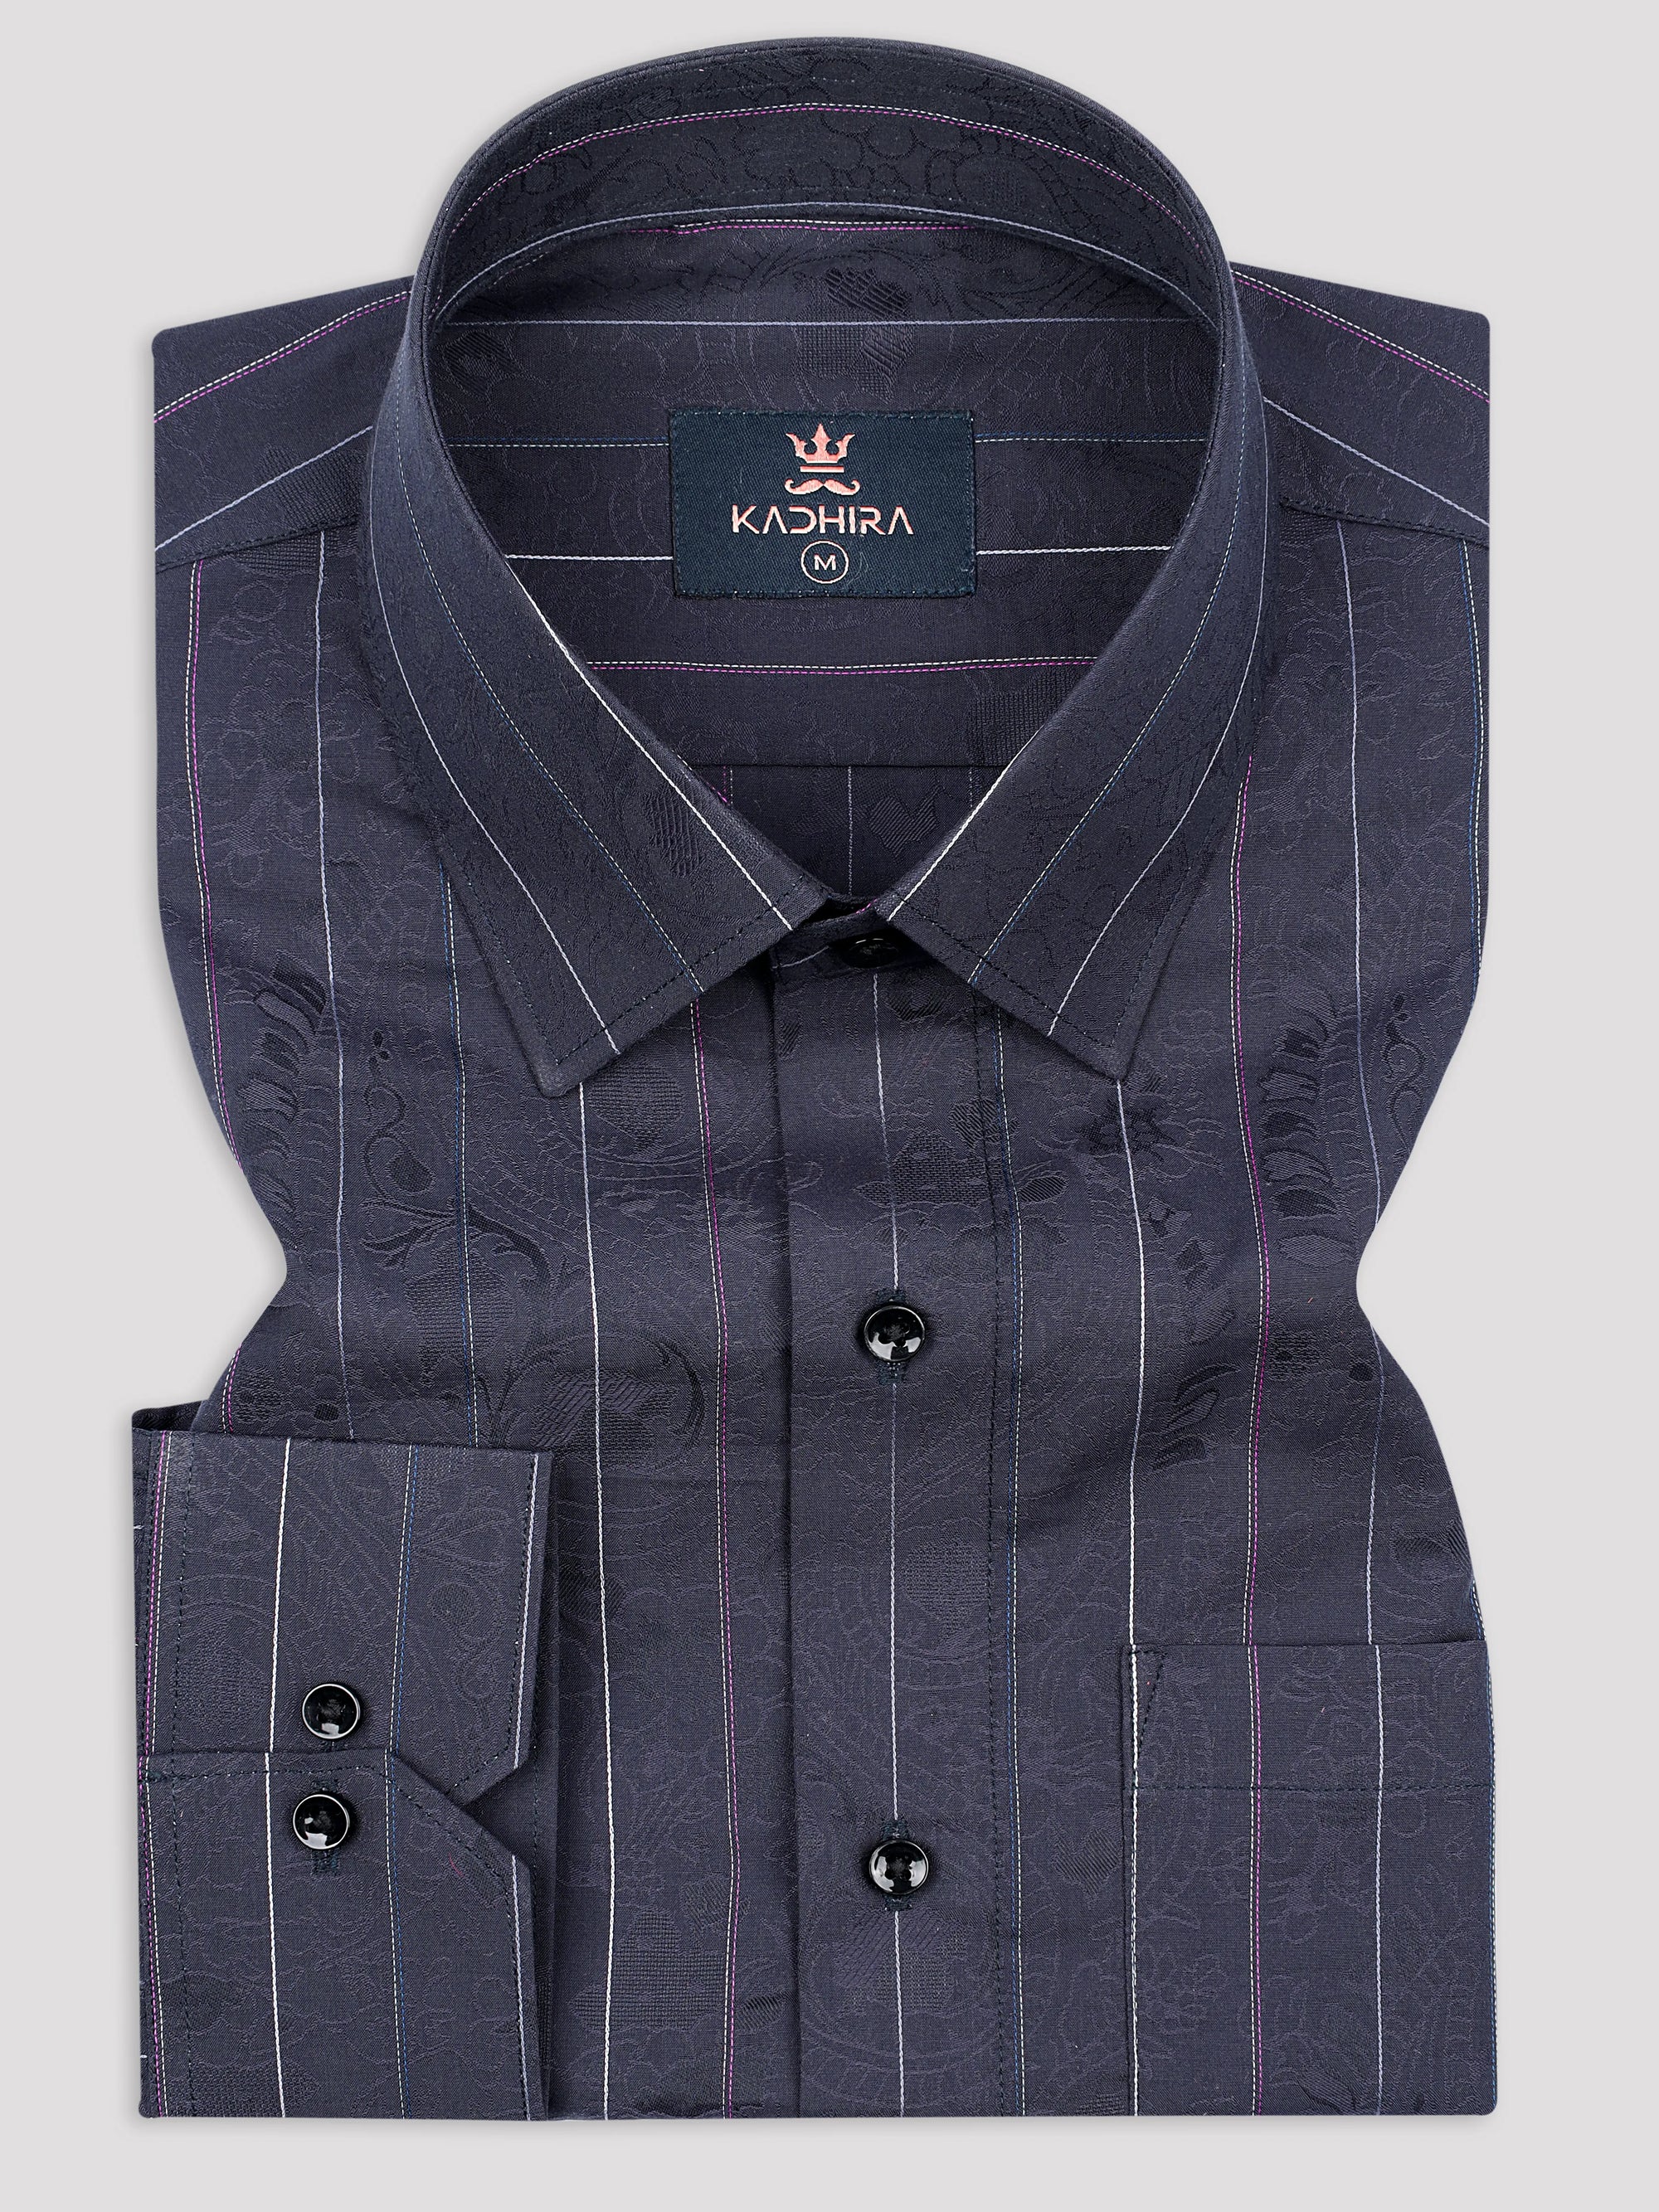 Oxford Blue With White Strips &amp; Paisley Texture Premium Cotton Shirt